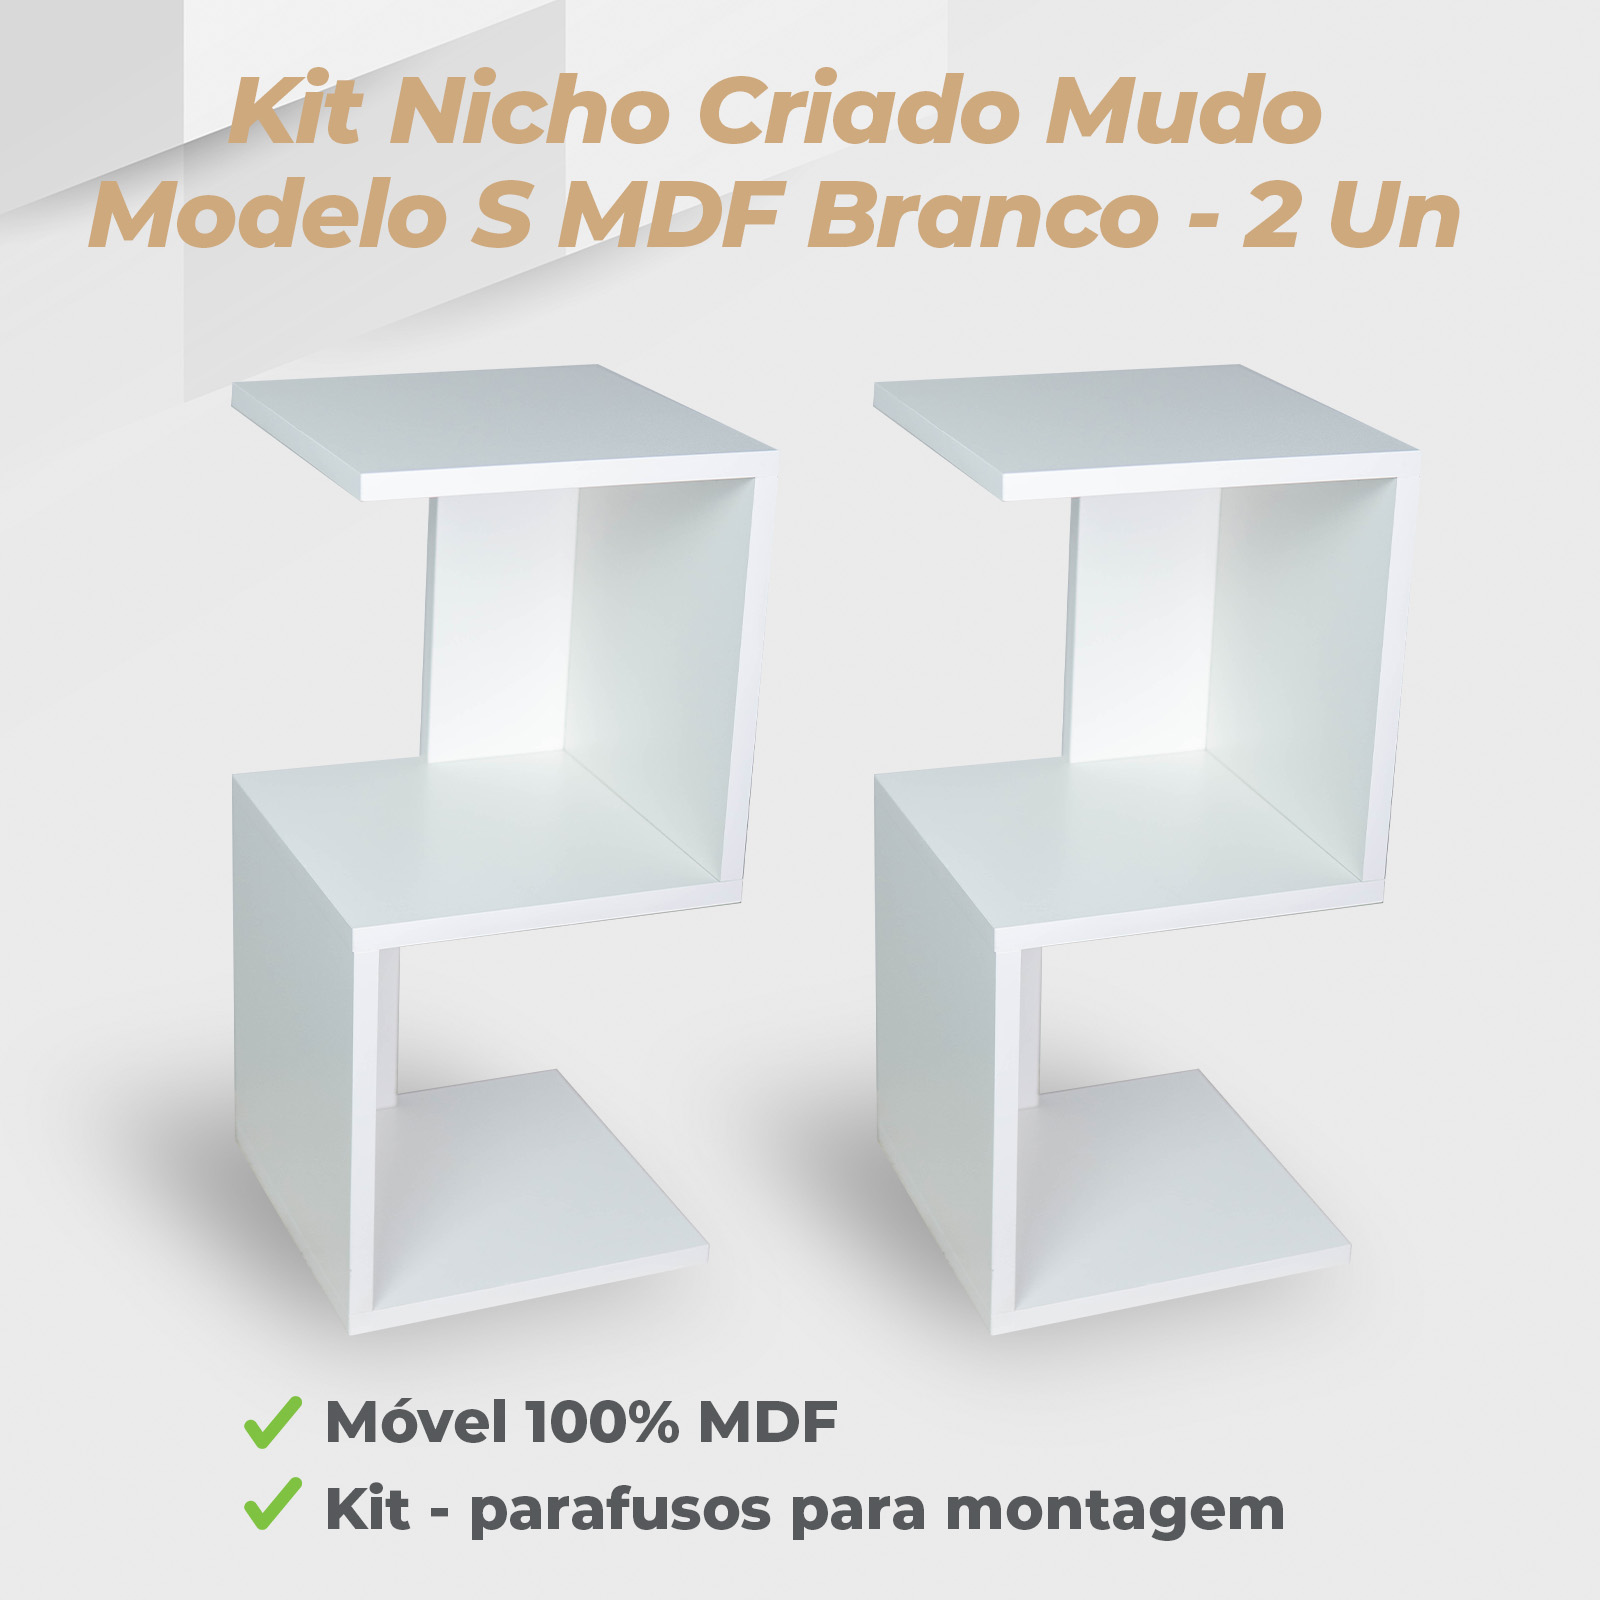 Kit Nicho Criado Mudo Modelo S MDF Branco - 2 Unidades